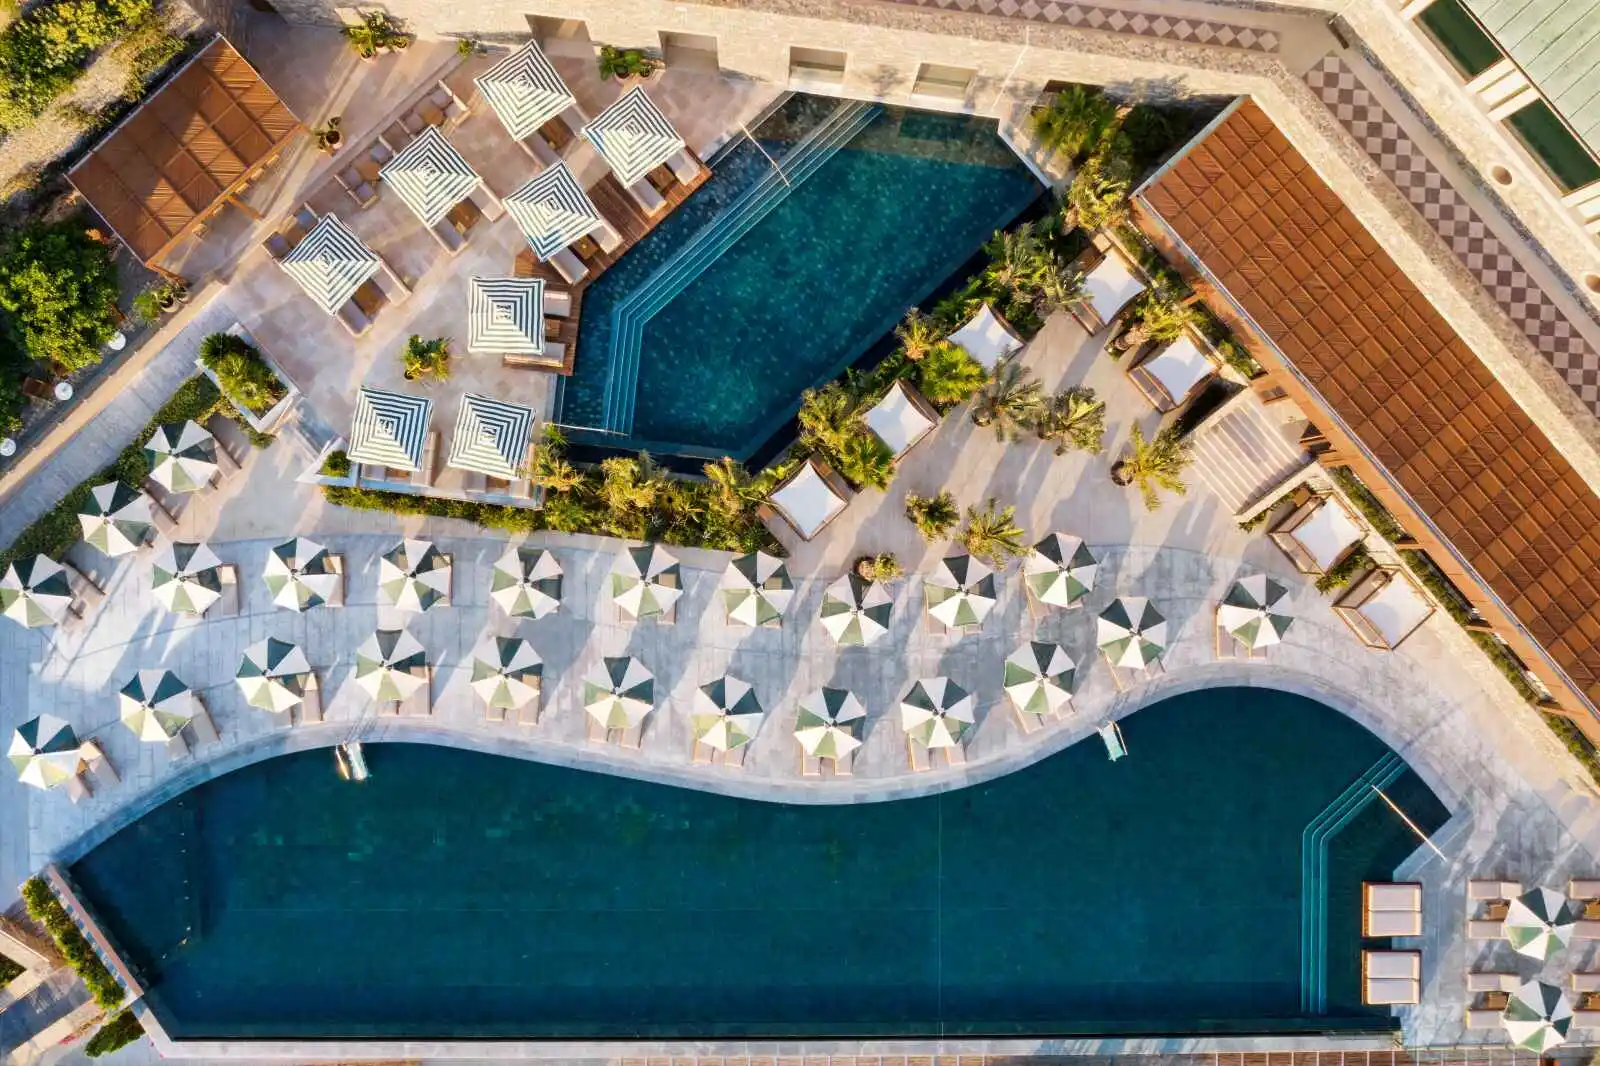 Crète - Agios Nikolaos - Grèce - Iles grecques - Hôtel Daios Cove Luxury Resort & Villas 5*